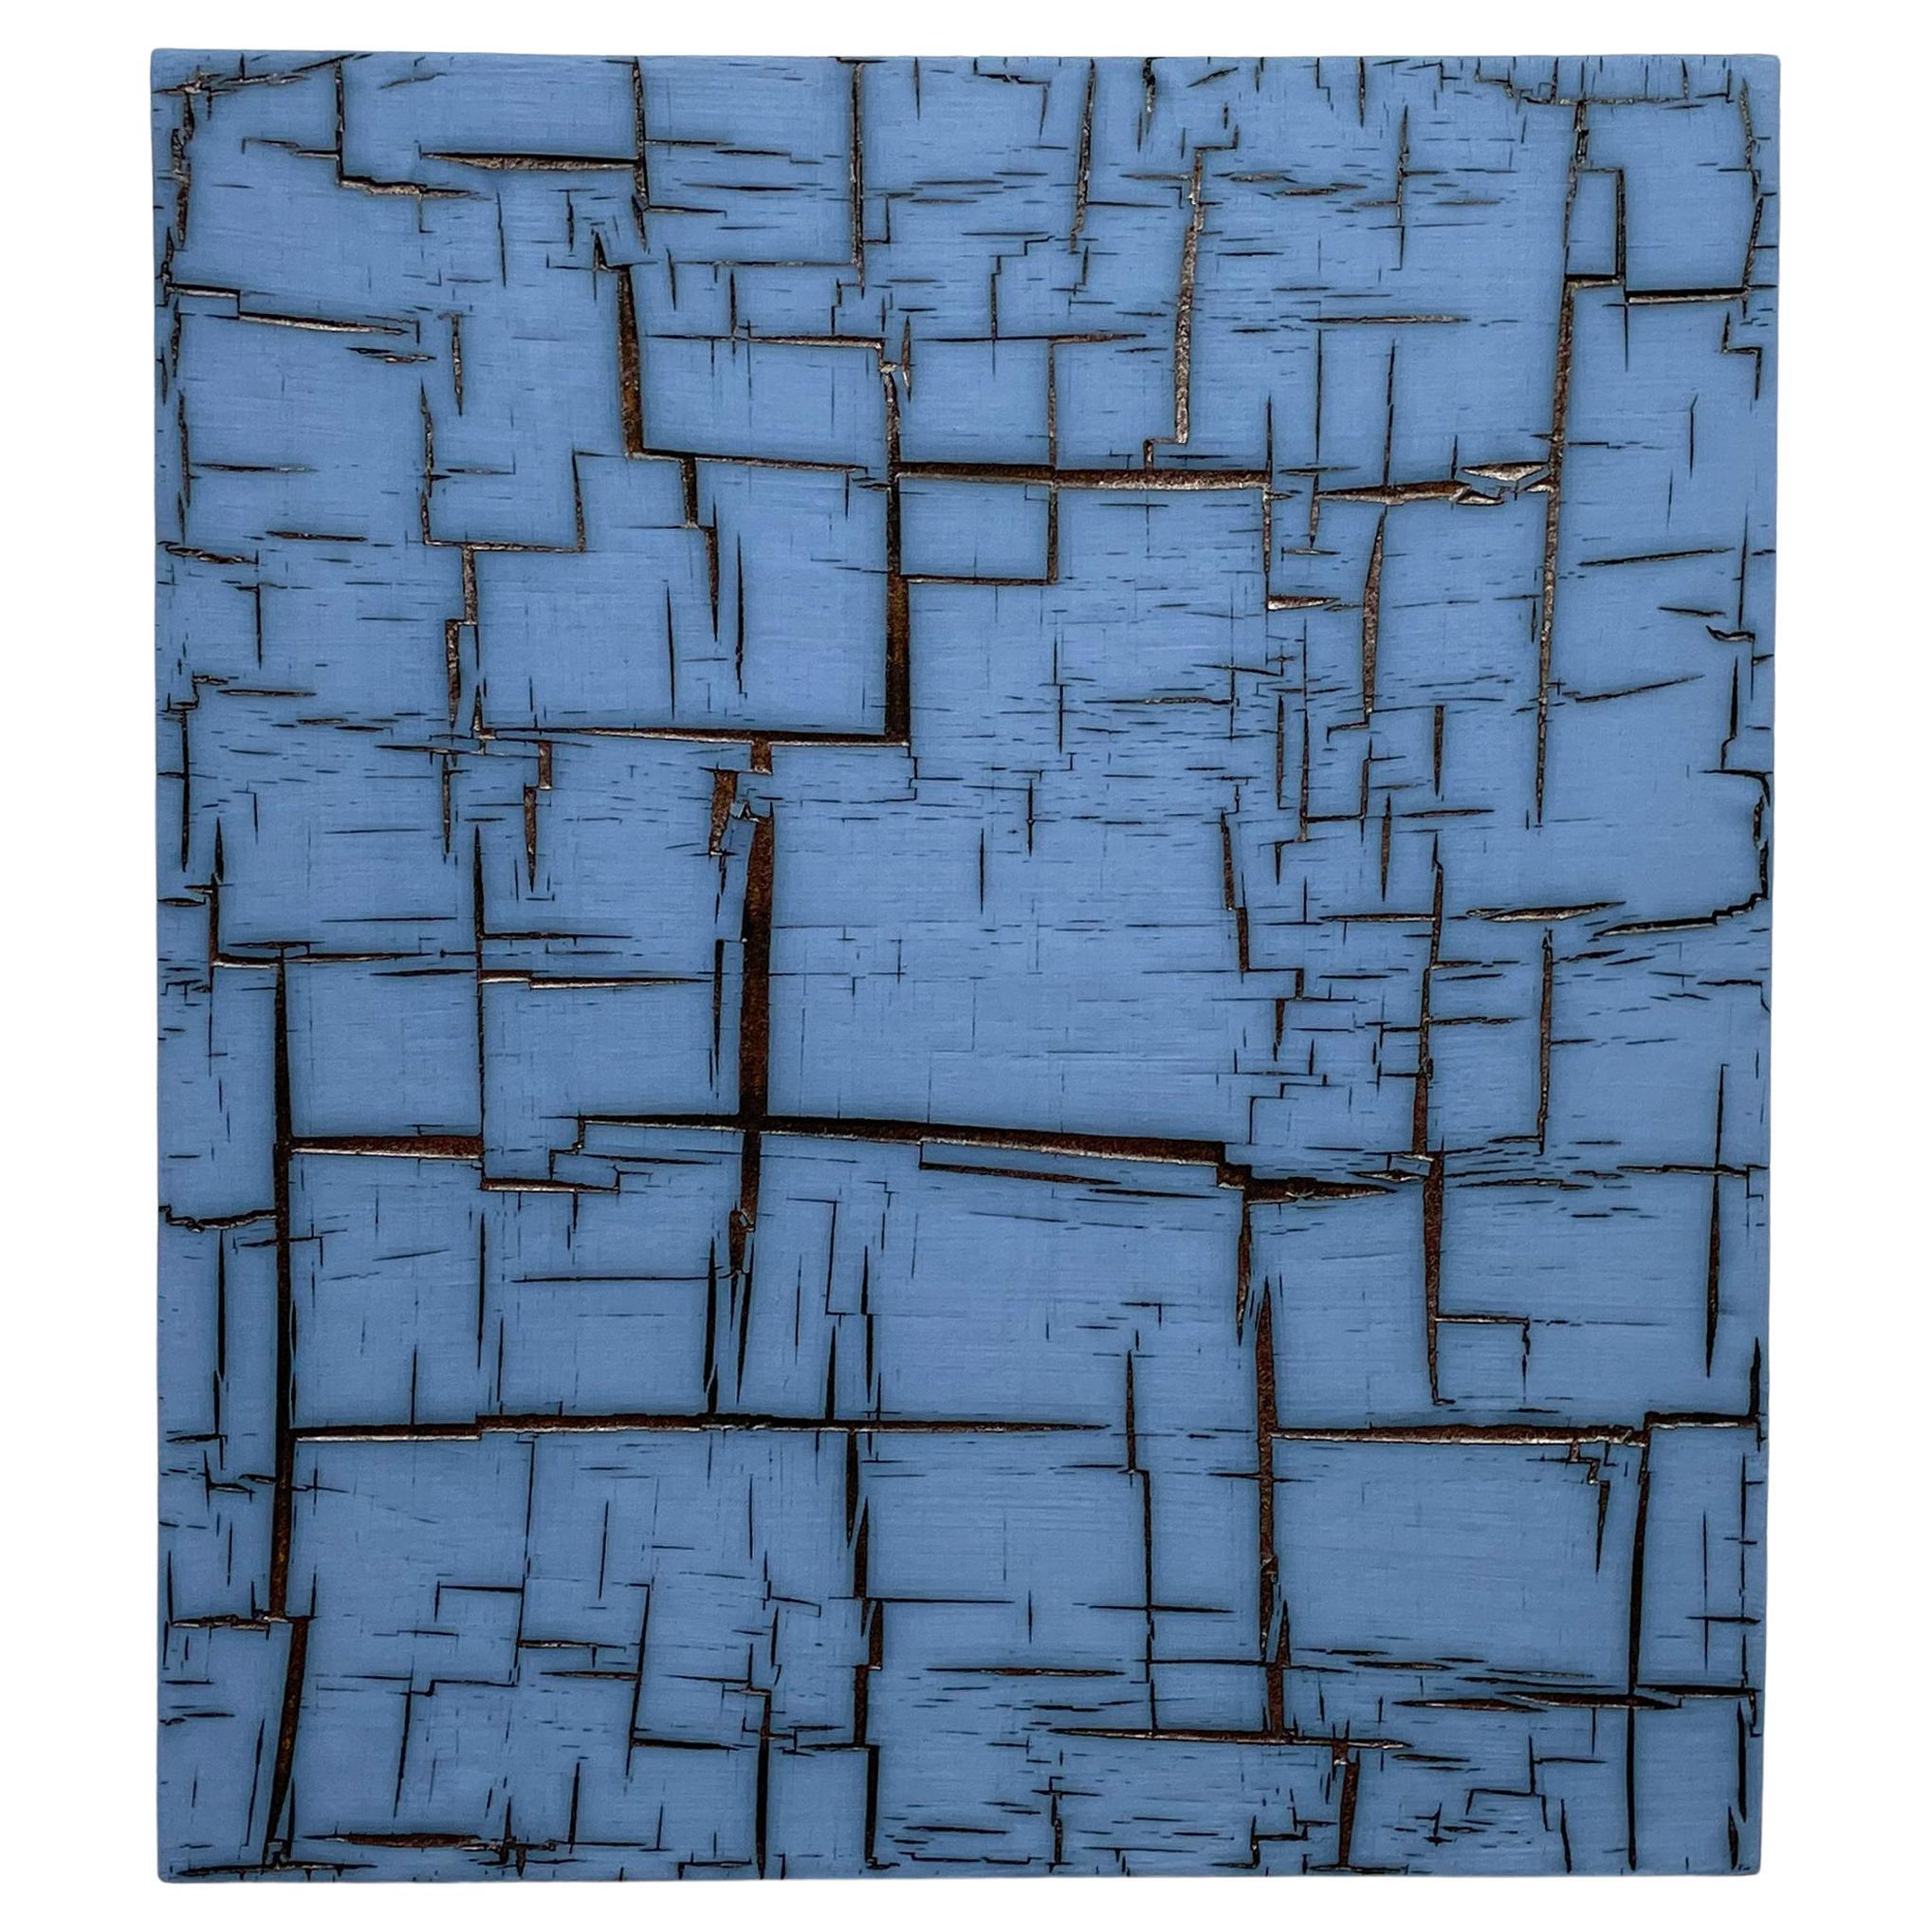 Matrix bleu - Art mural en céramique de William Edwards en vente